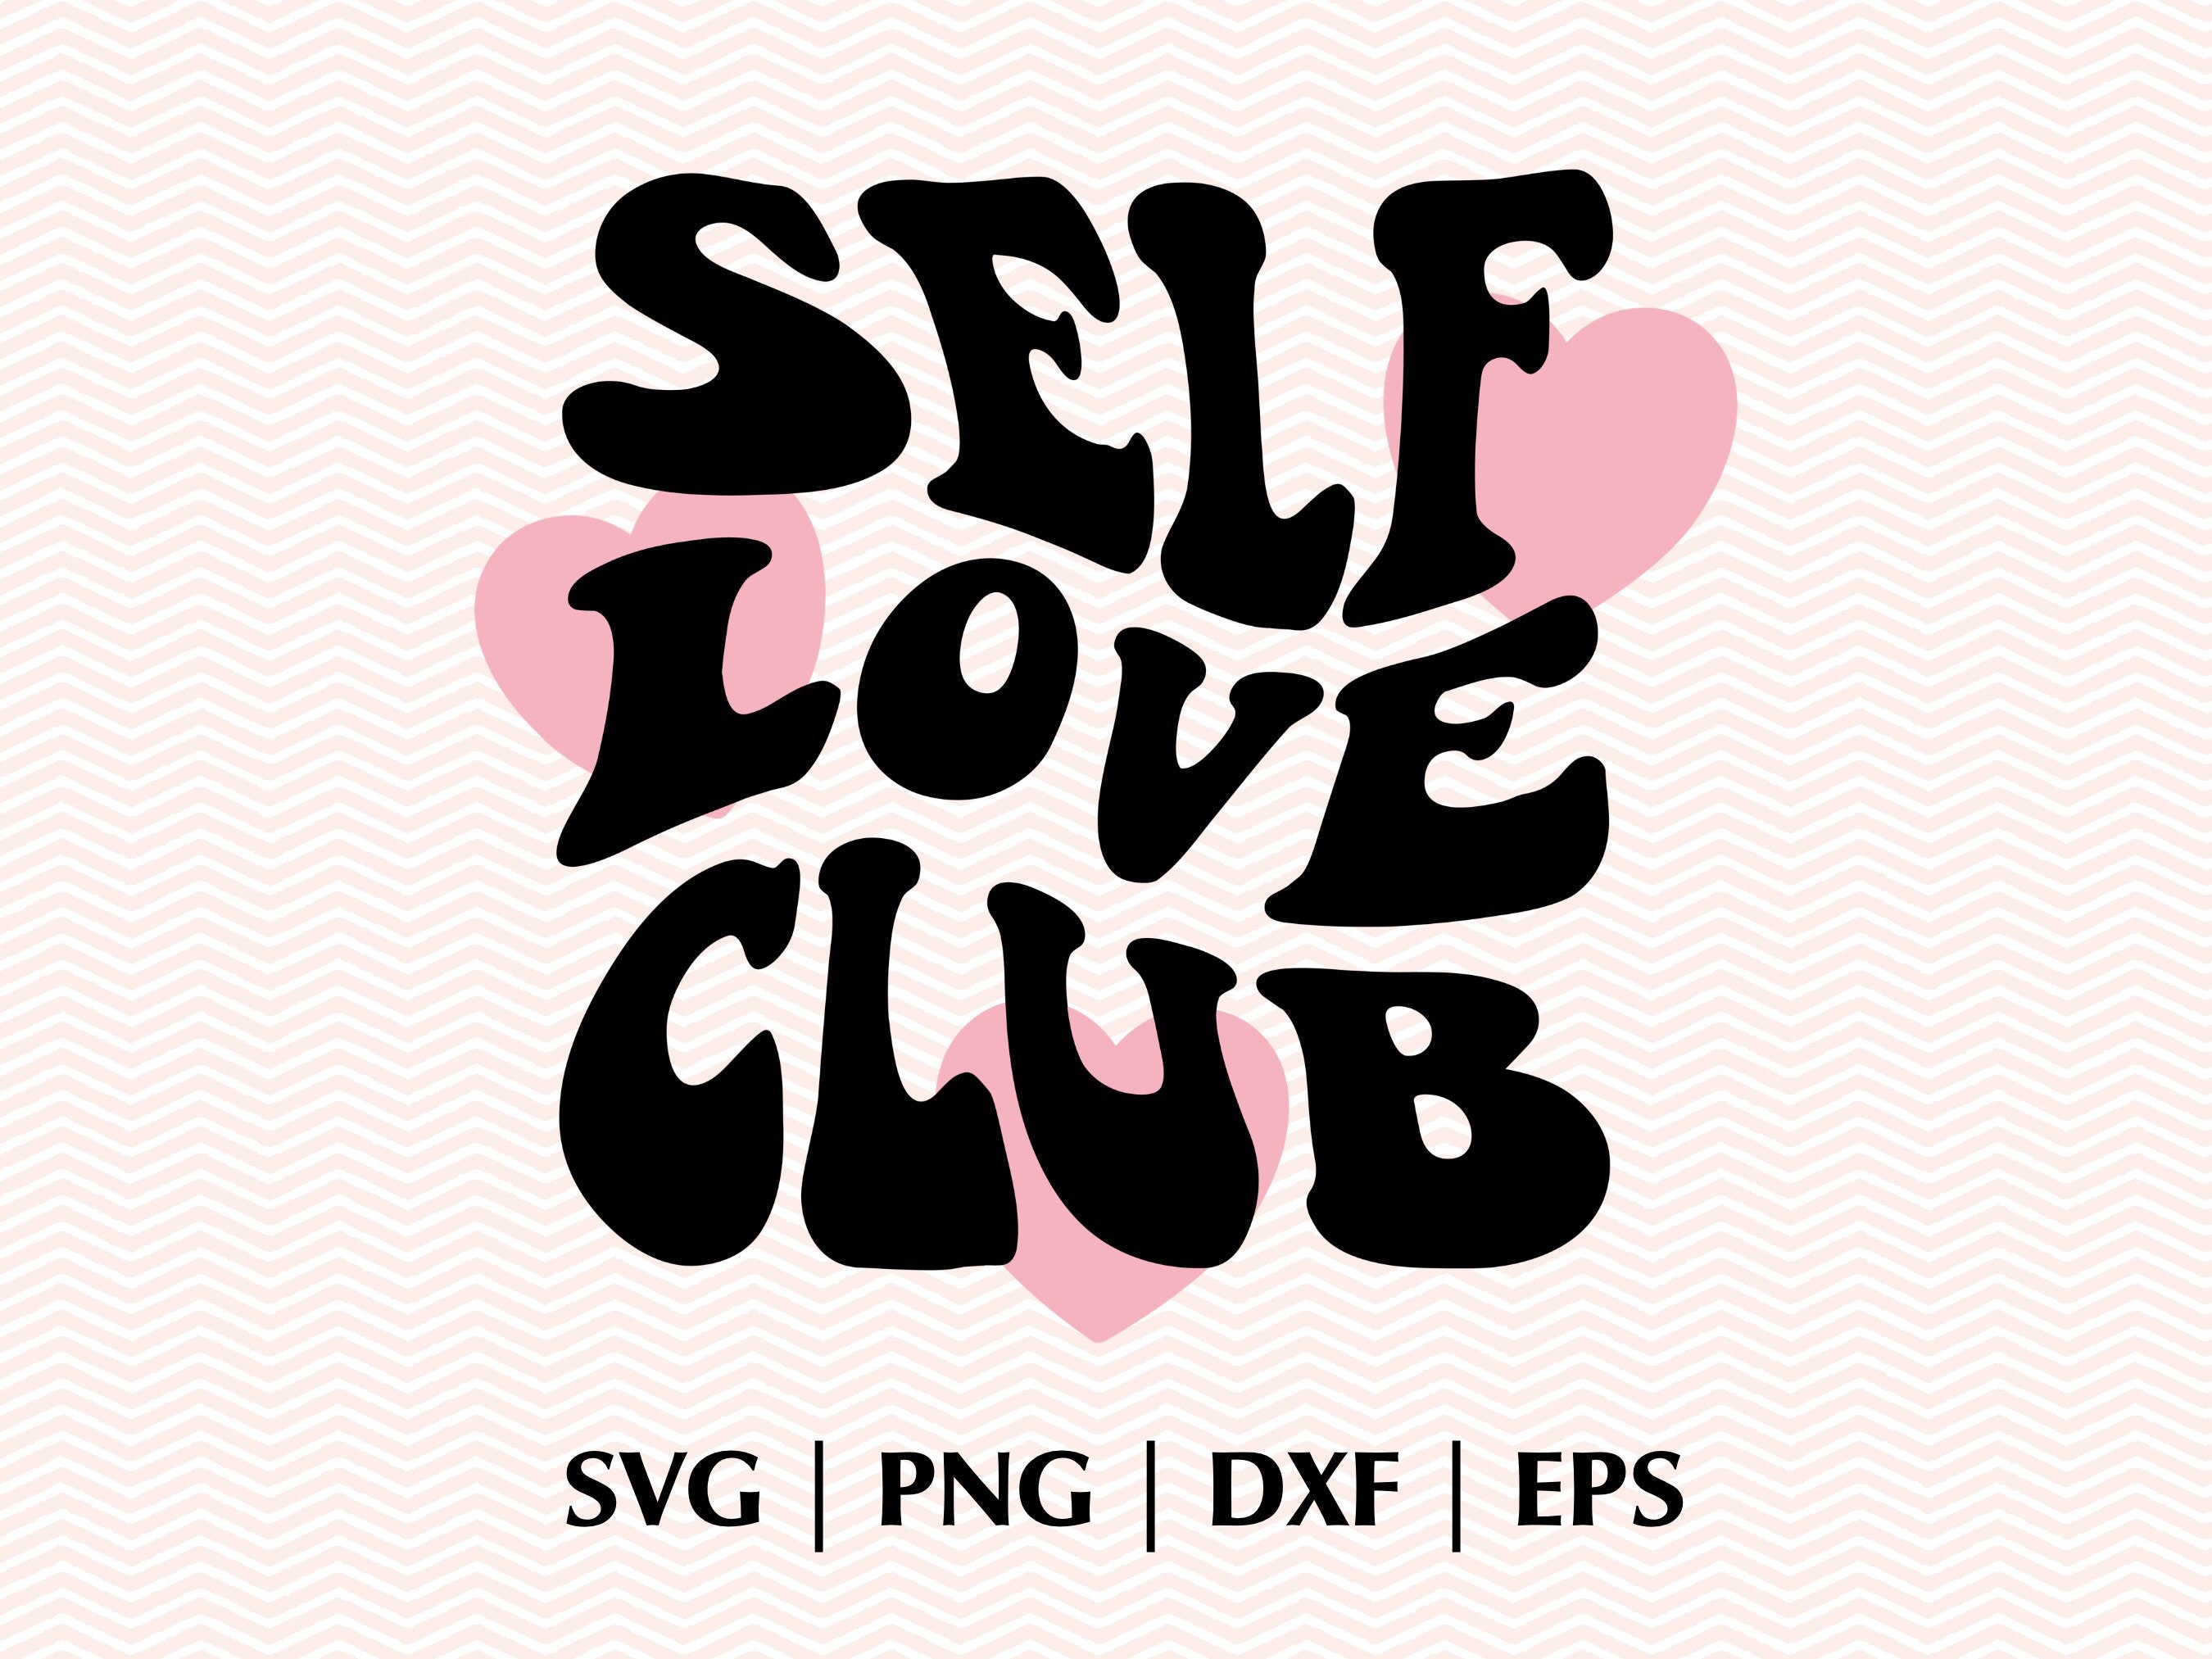 Self Love Club SVG PNG Eps Dxf Positive SVG - Etsy